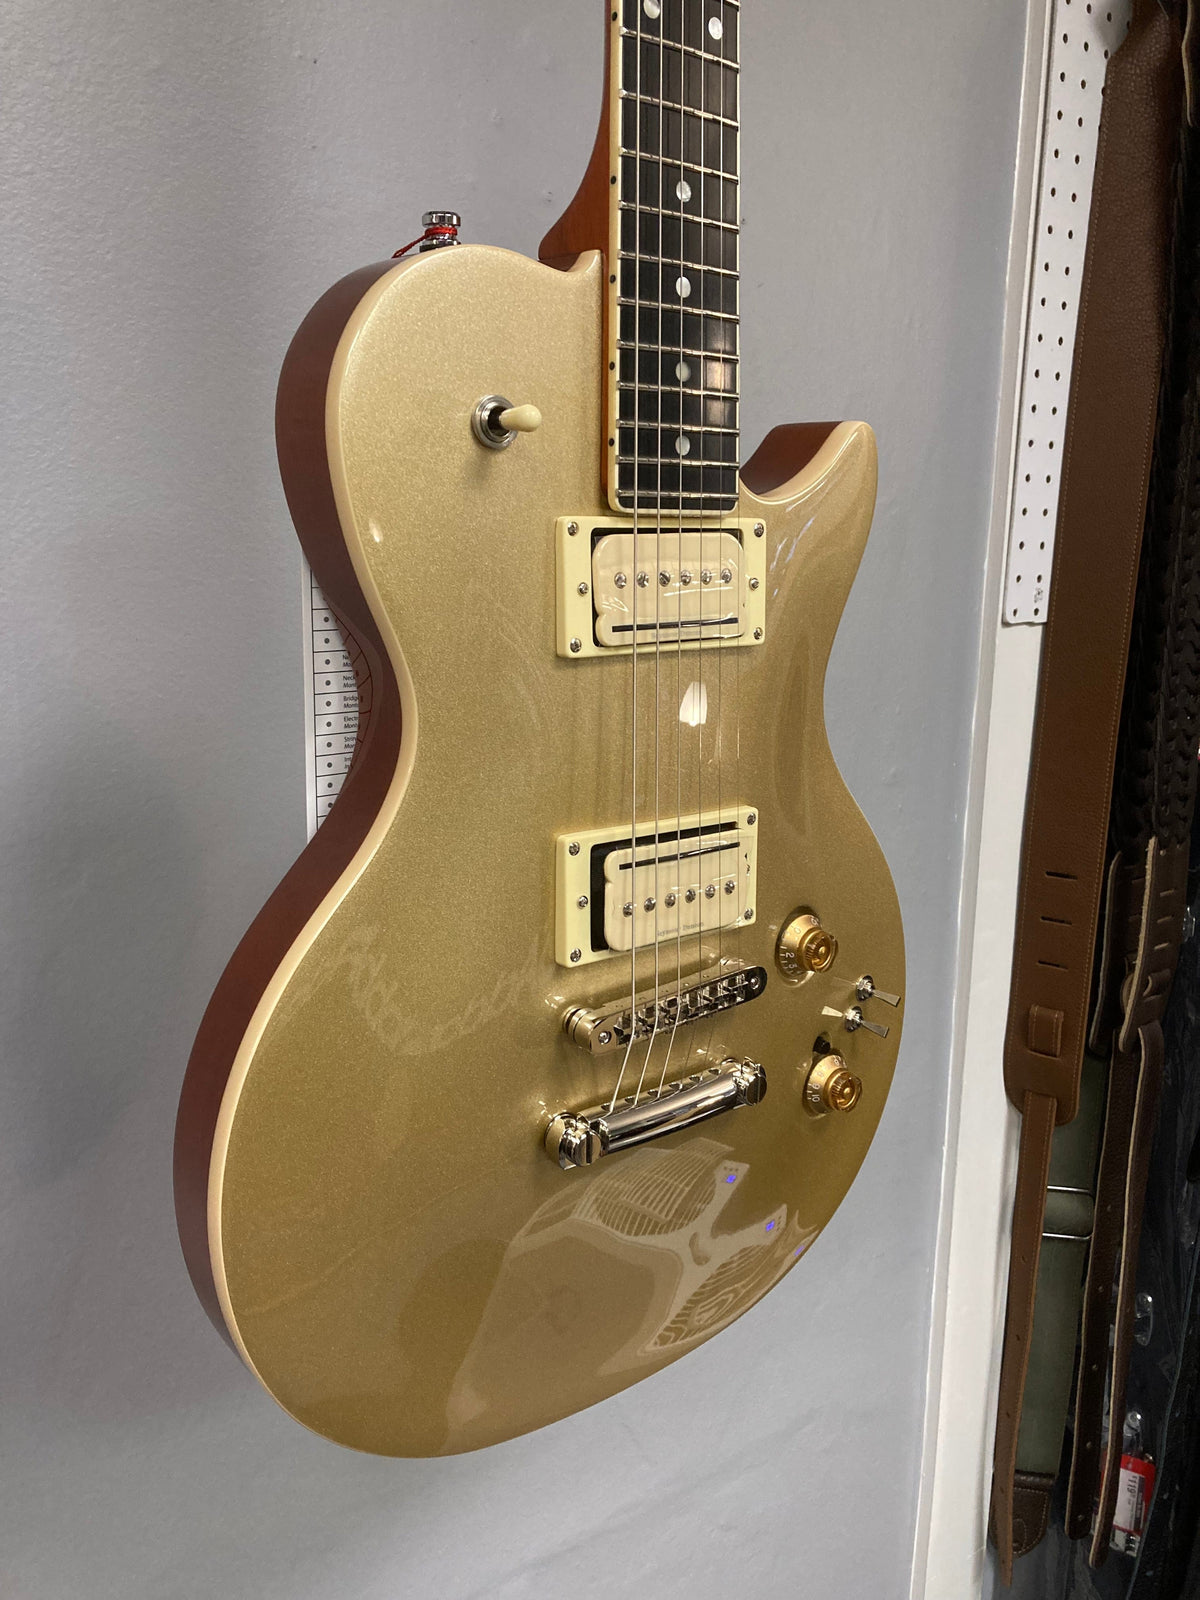 Godin Summit Classic Convertible Gold w/Prails Guitars on...